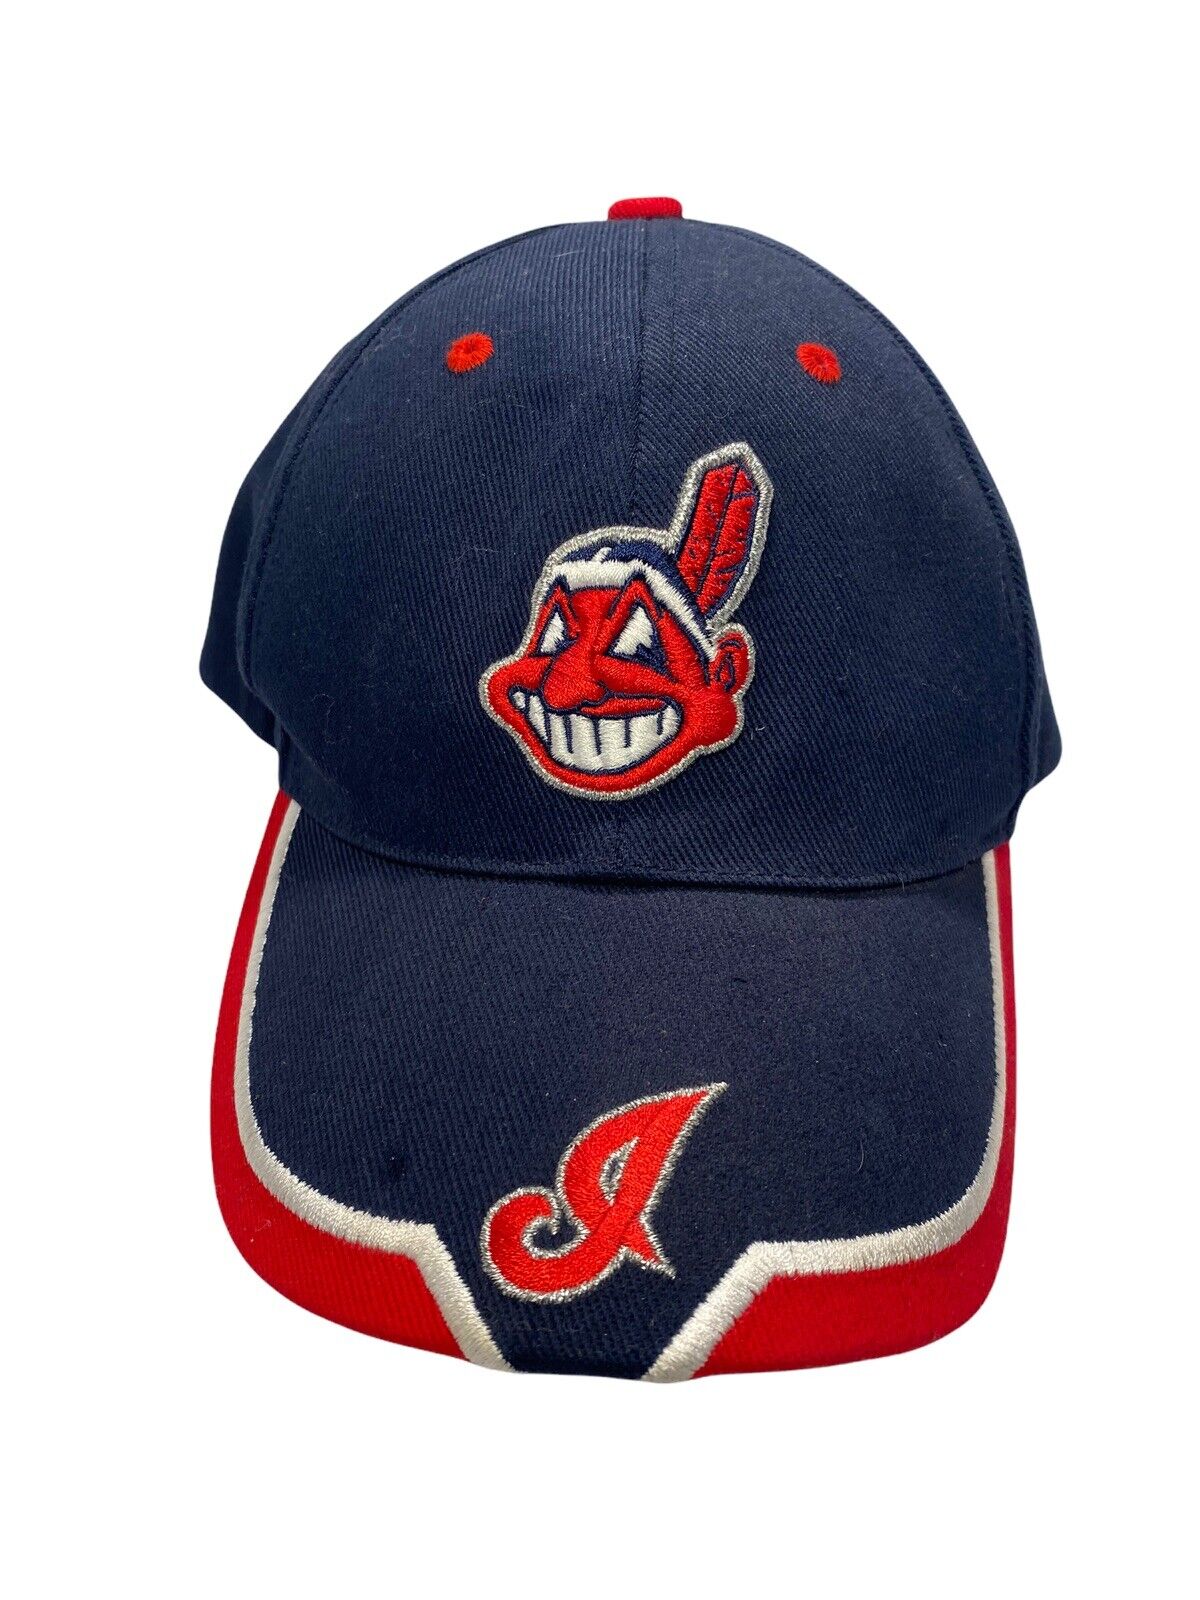 Cleveland Indians StrapBack Hat 70% OFF Outlet Financial sales sale Cap MLB Genuine Merchandise Baseball Official